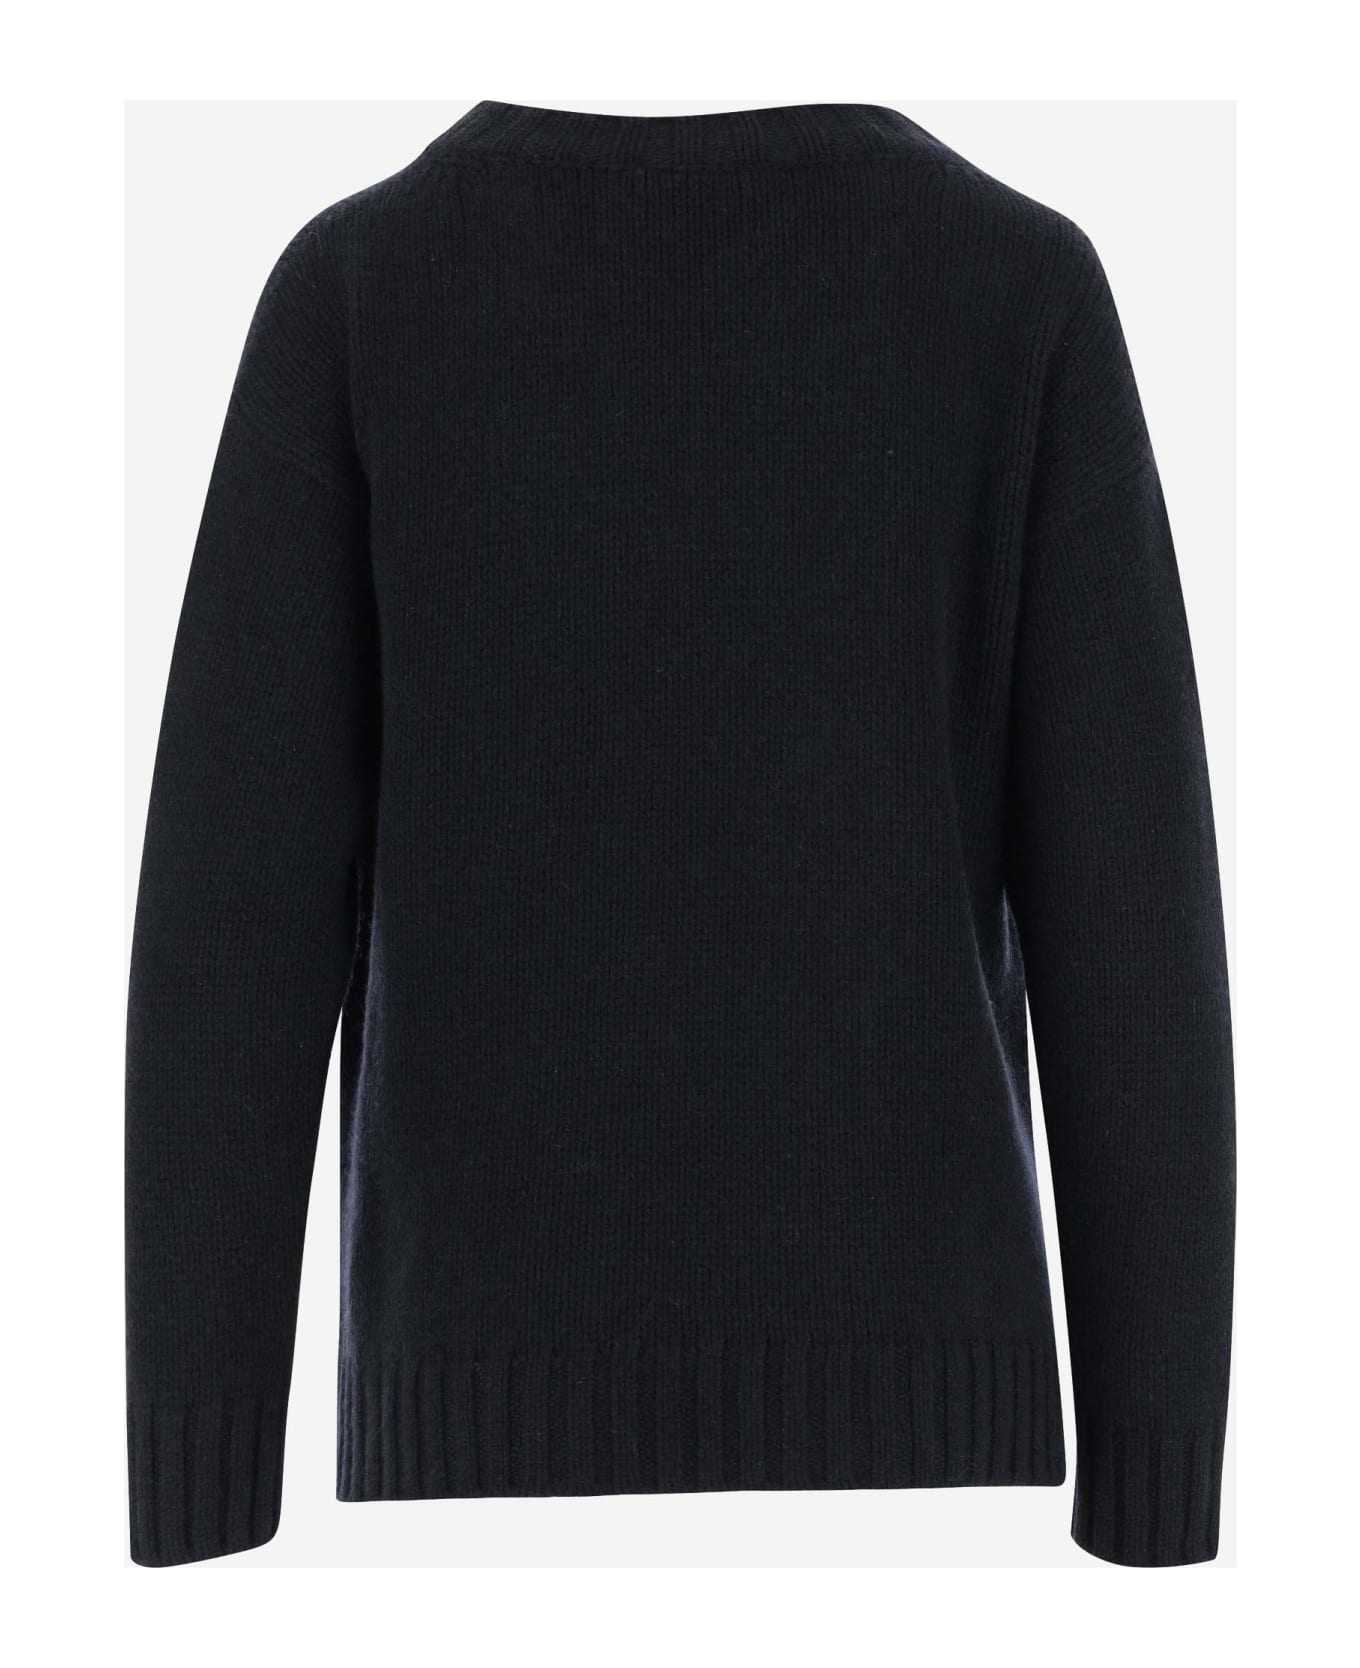 Bruno Manetti Cashmere Sweater - Black ニットウェア